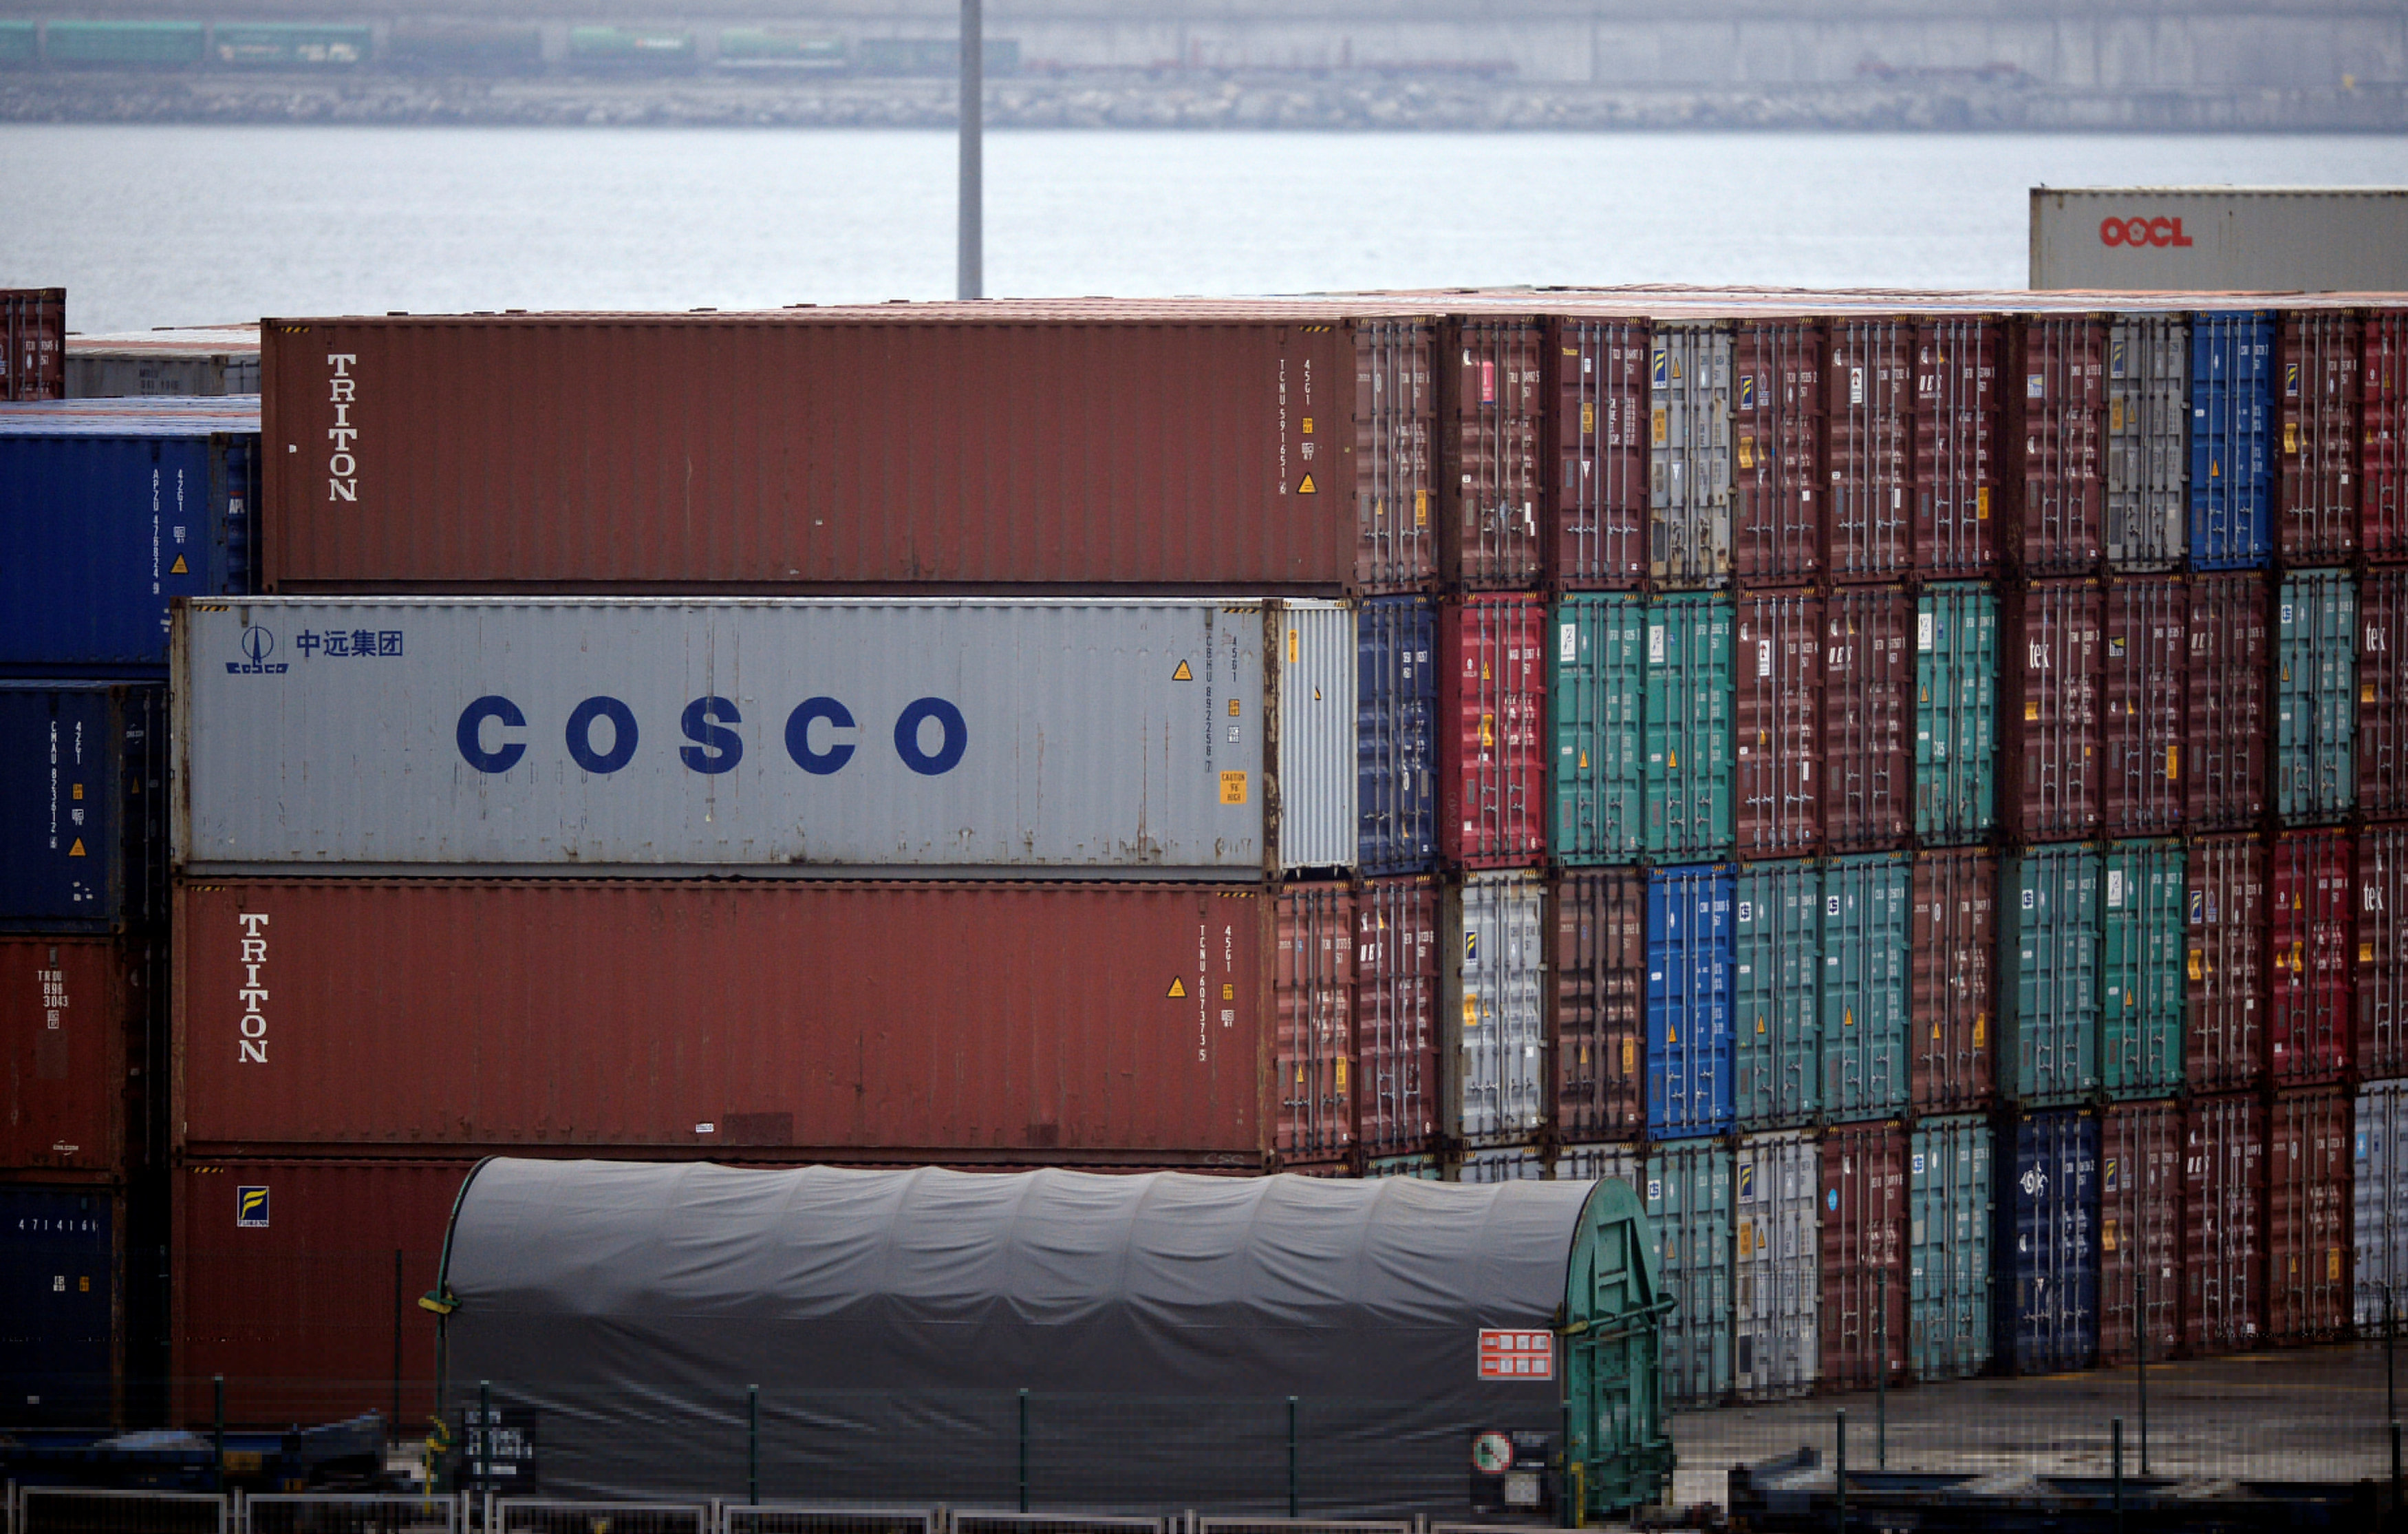 A COSCO container is seen at the Noatum container terminal near Bilboa, in Santurtzi, Spain June 14, 2017. (Vincent West / Reuters)